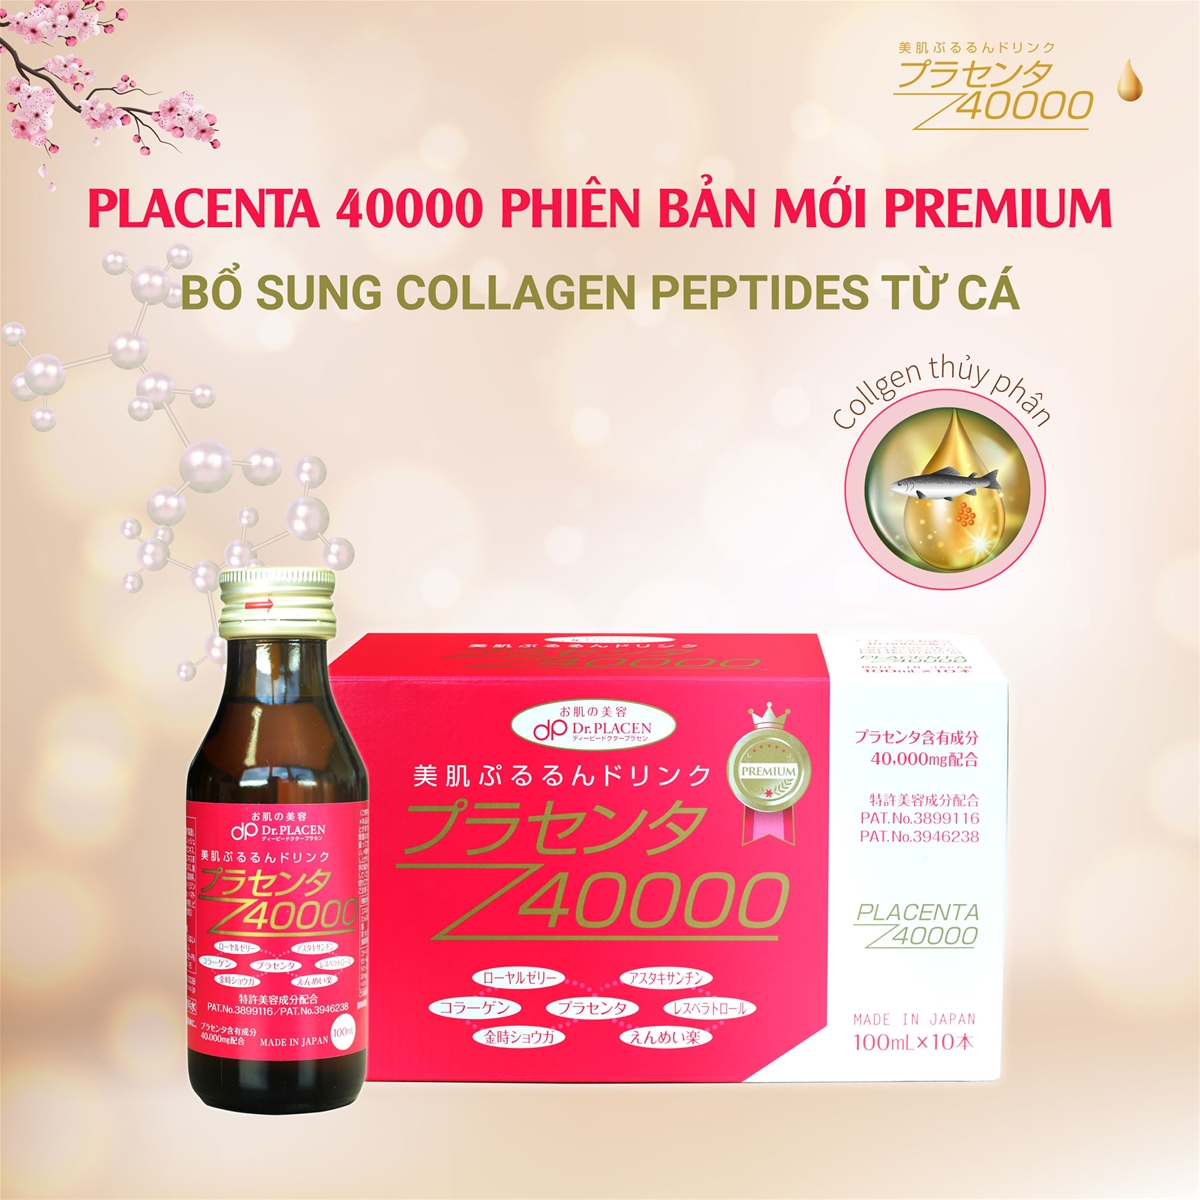 Placenta 40000 Premium bổ sung collagen thủy phần từ cá